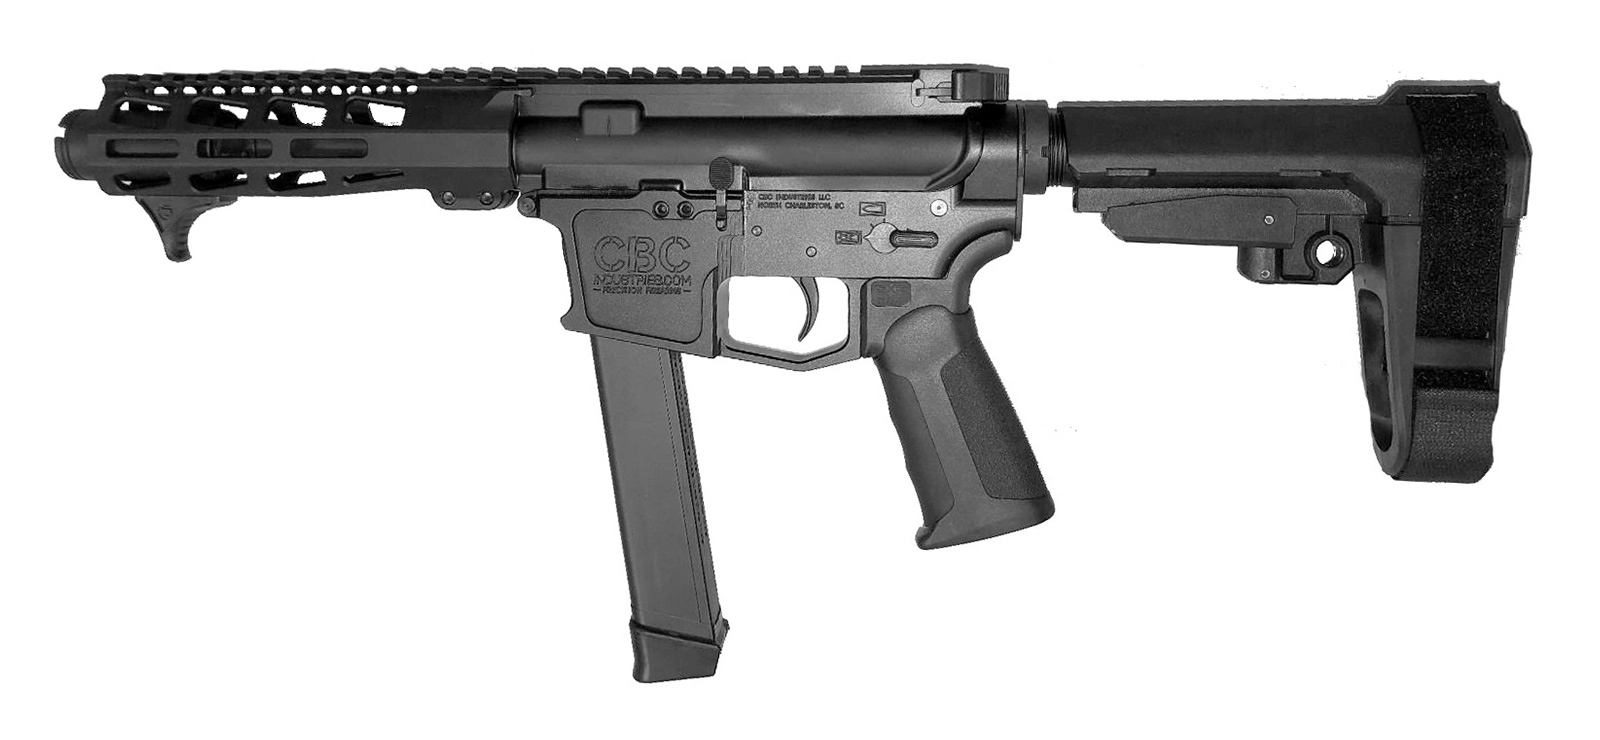 cbc-ps2-complete-ar-upper-9mm-4-5-barrel-6-5-rail-bcg-ch-flash-can-lock-back